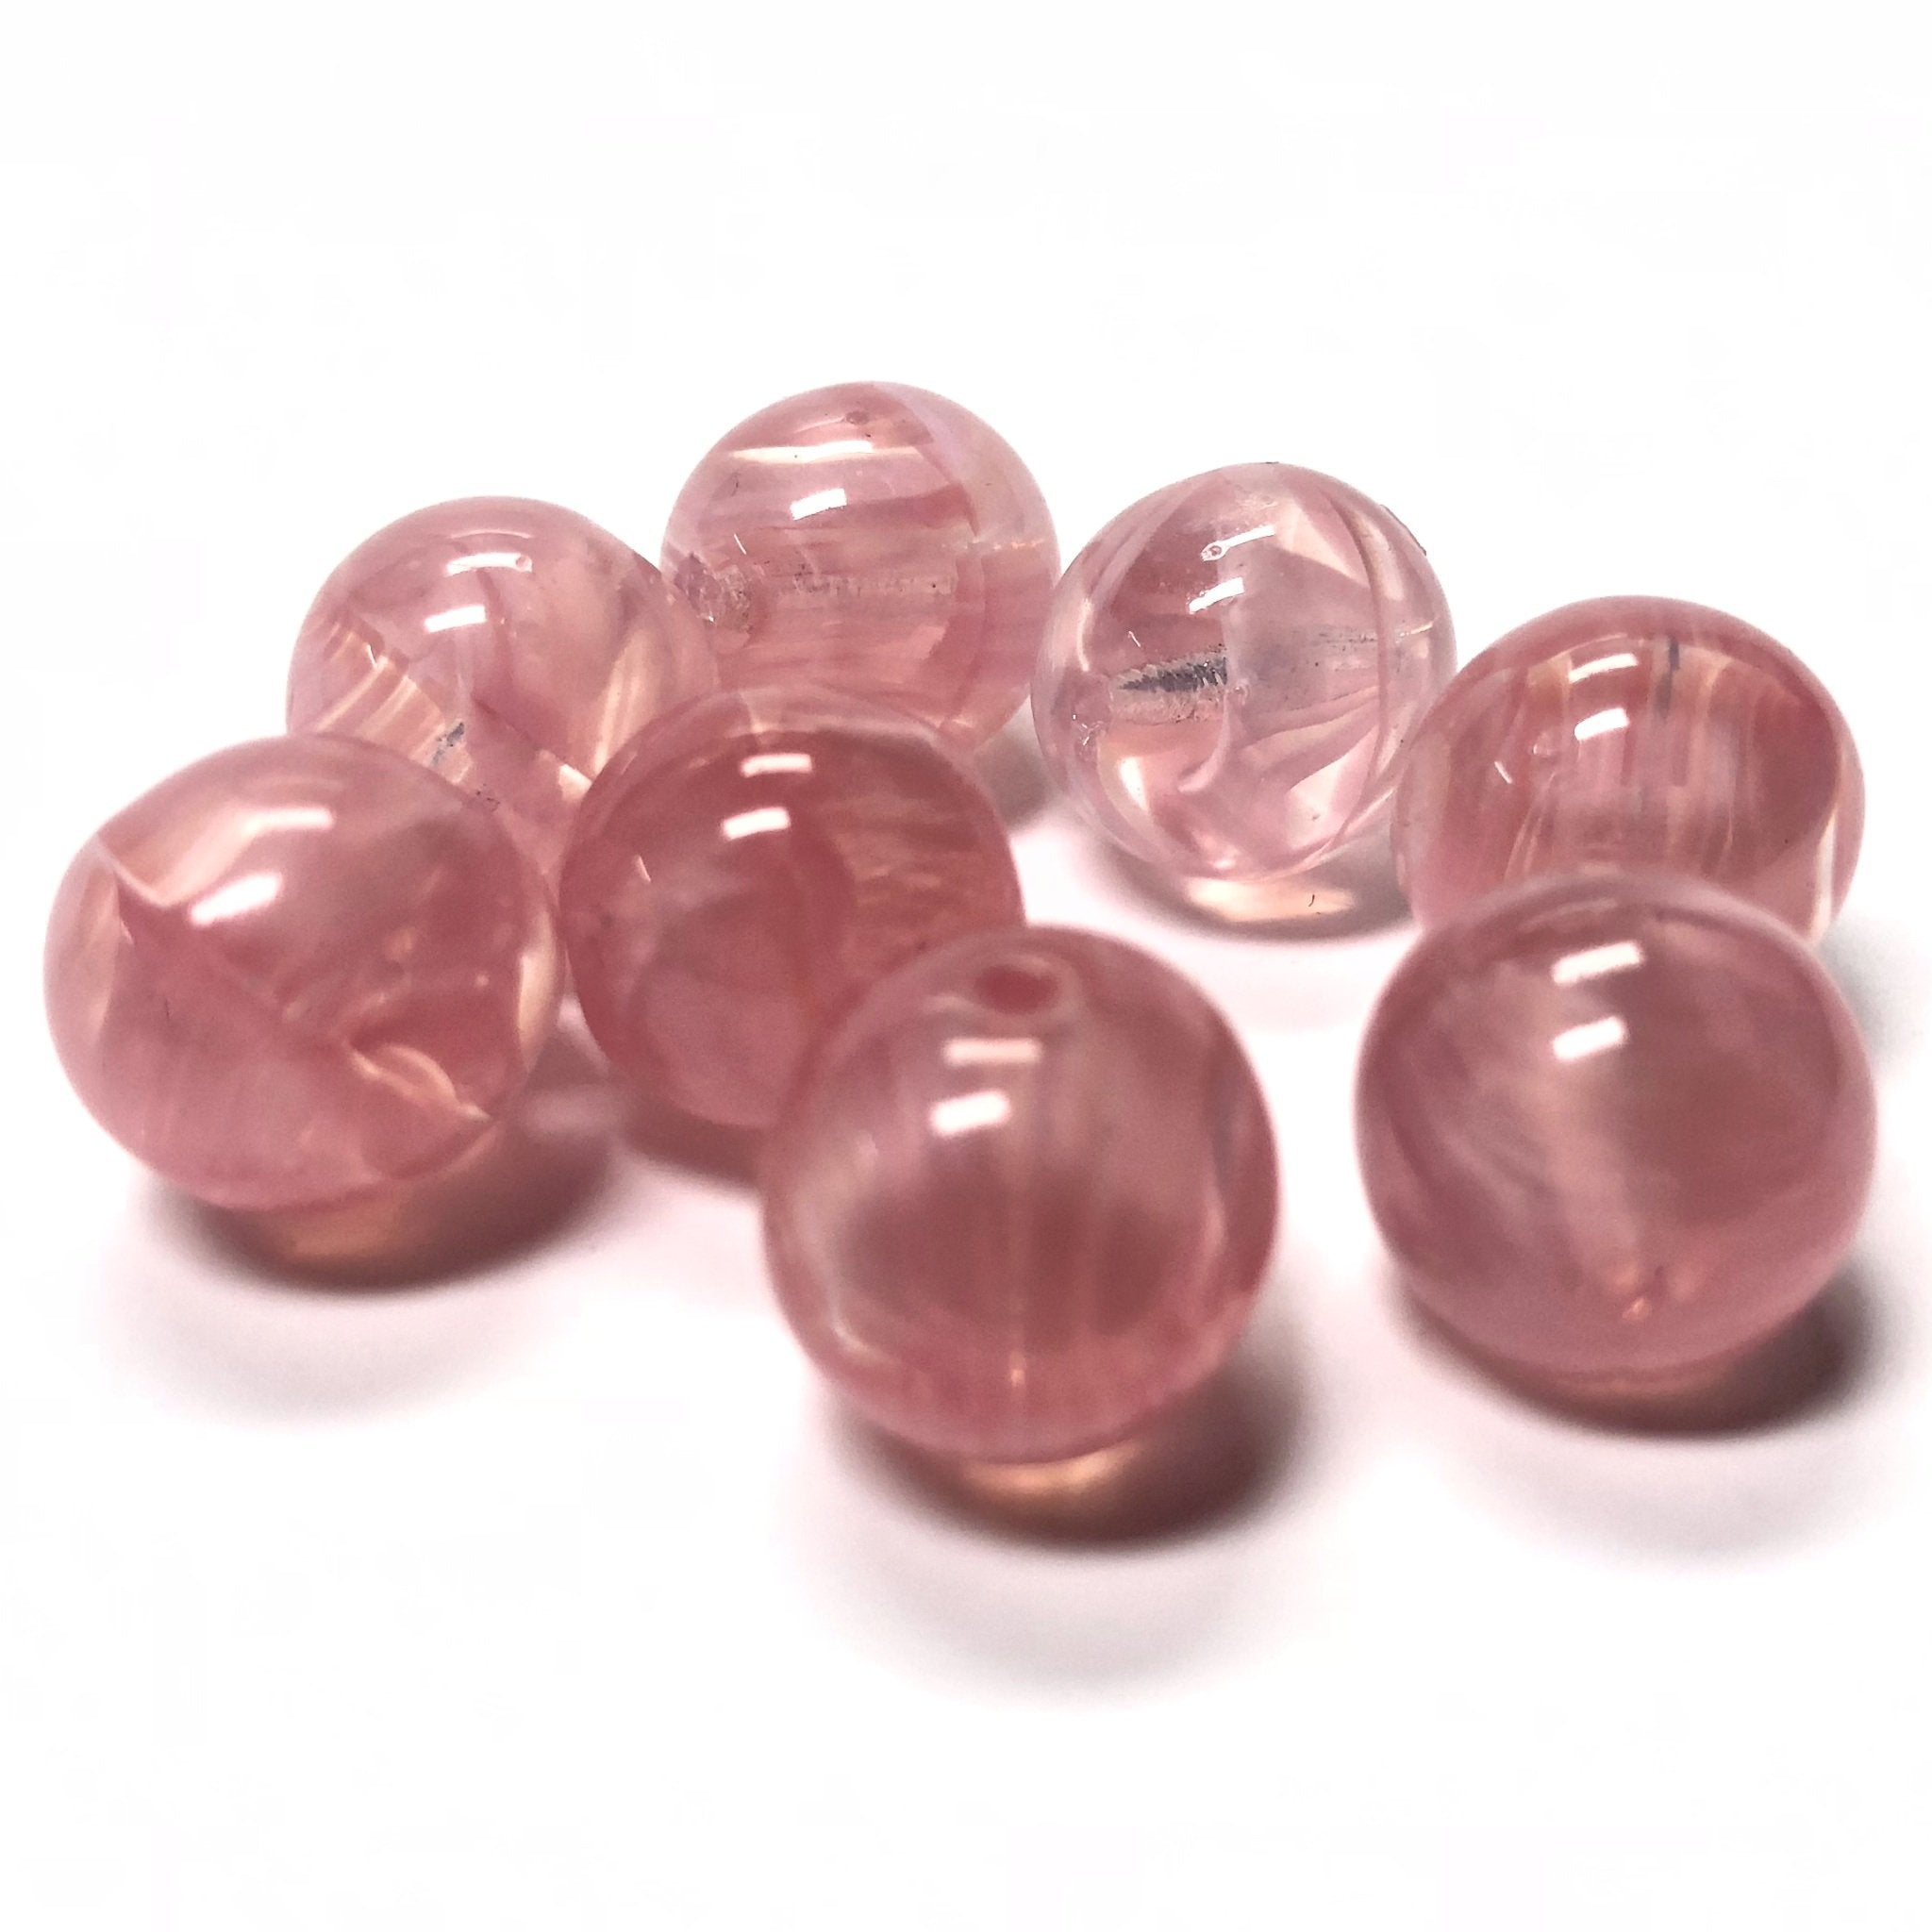 4MM Light Pink Quartz Glass Beads (300 pieces)